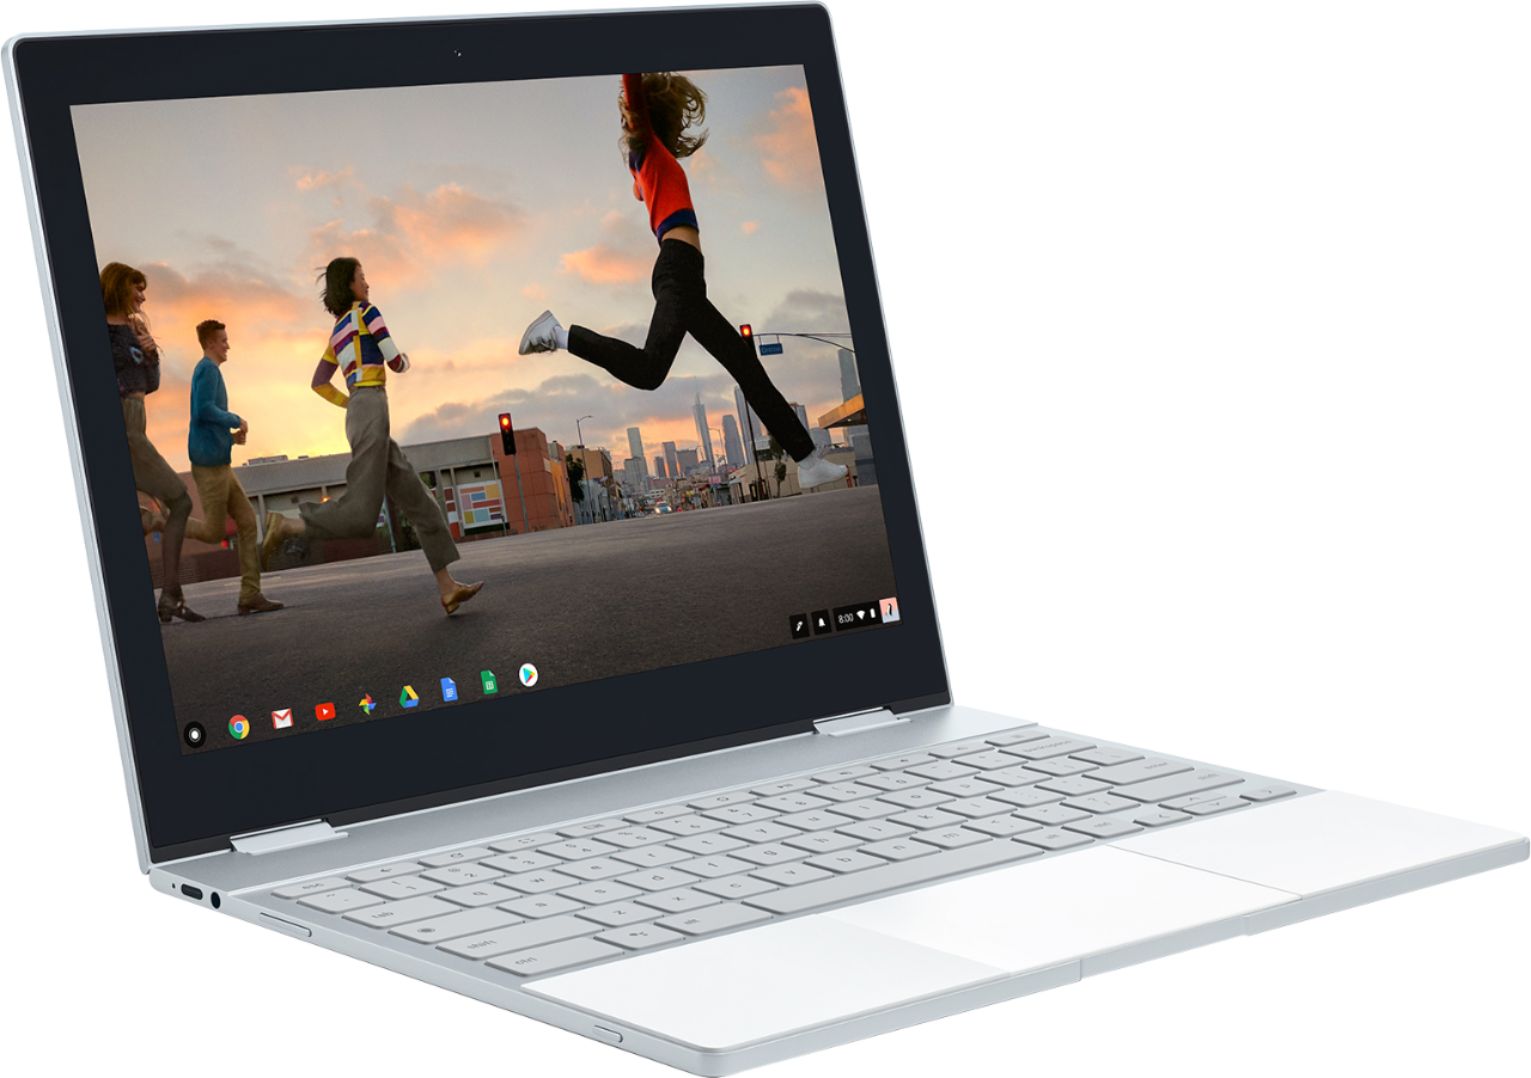 GooglePixelbook Chromebook　i7/16GB/ 512G